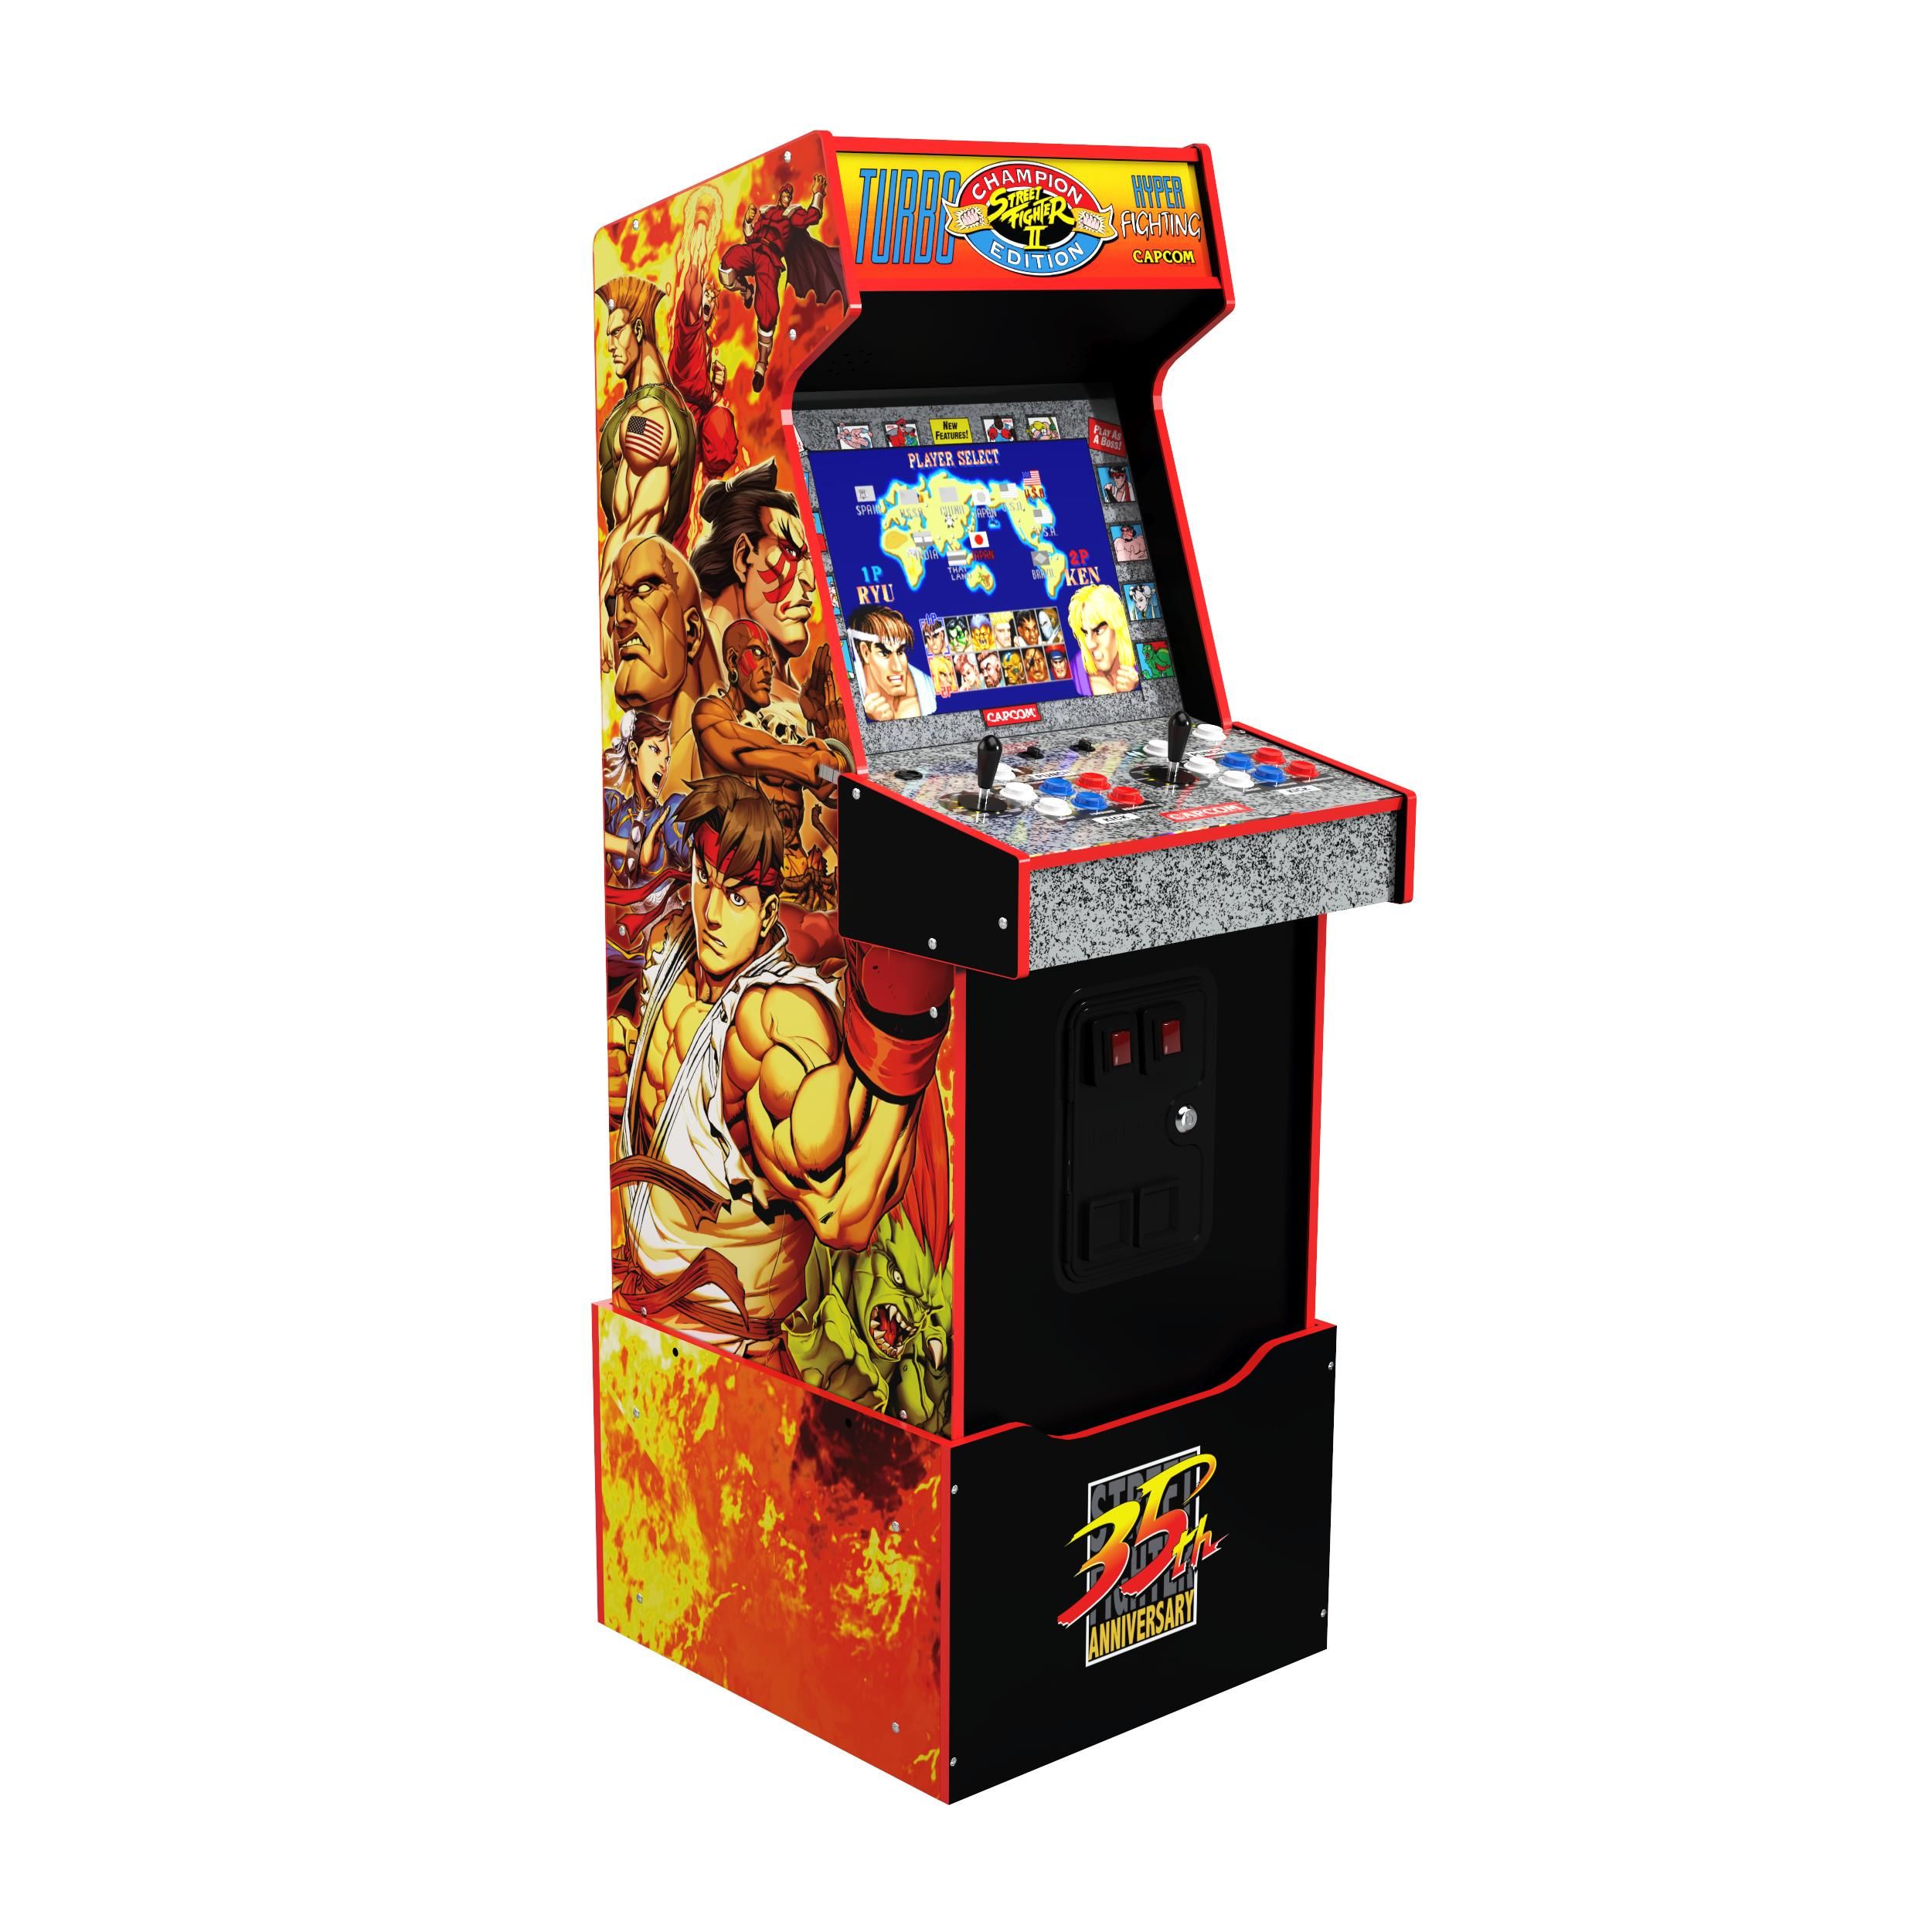 Arcade1up Console Videogioco Street